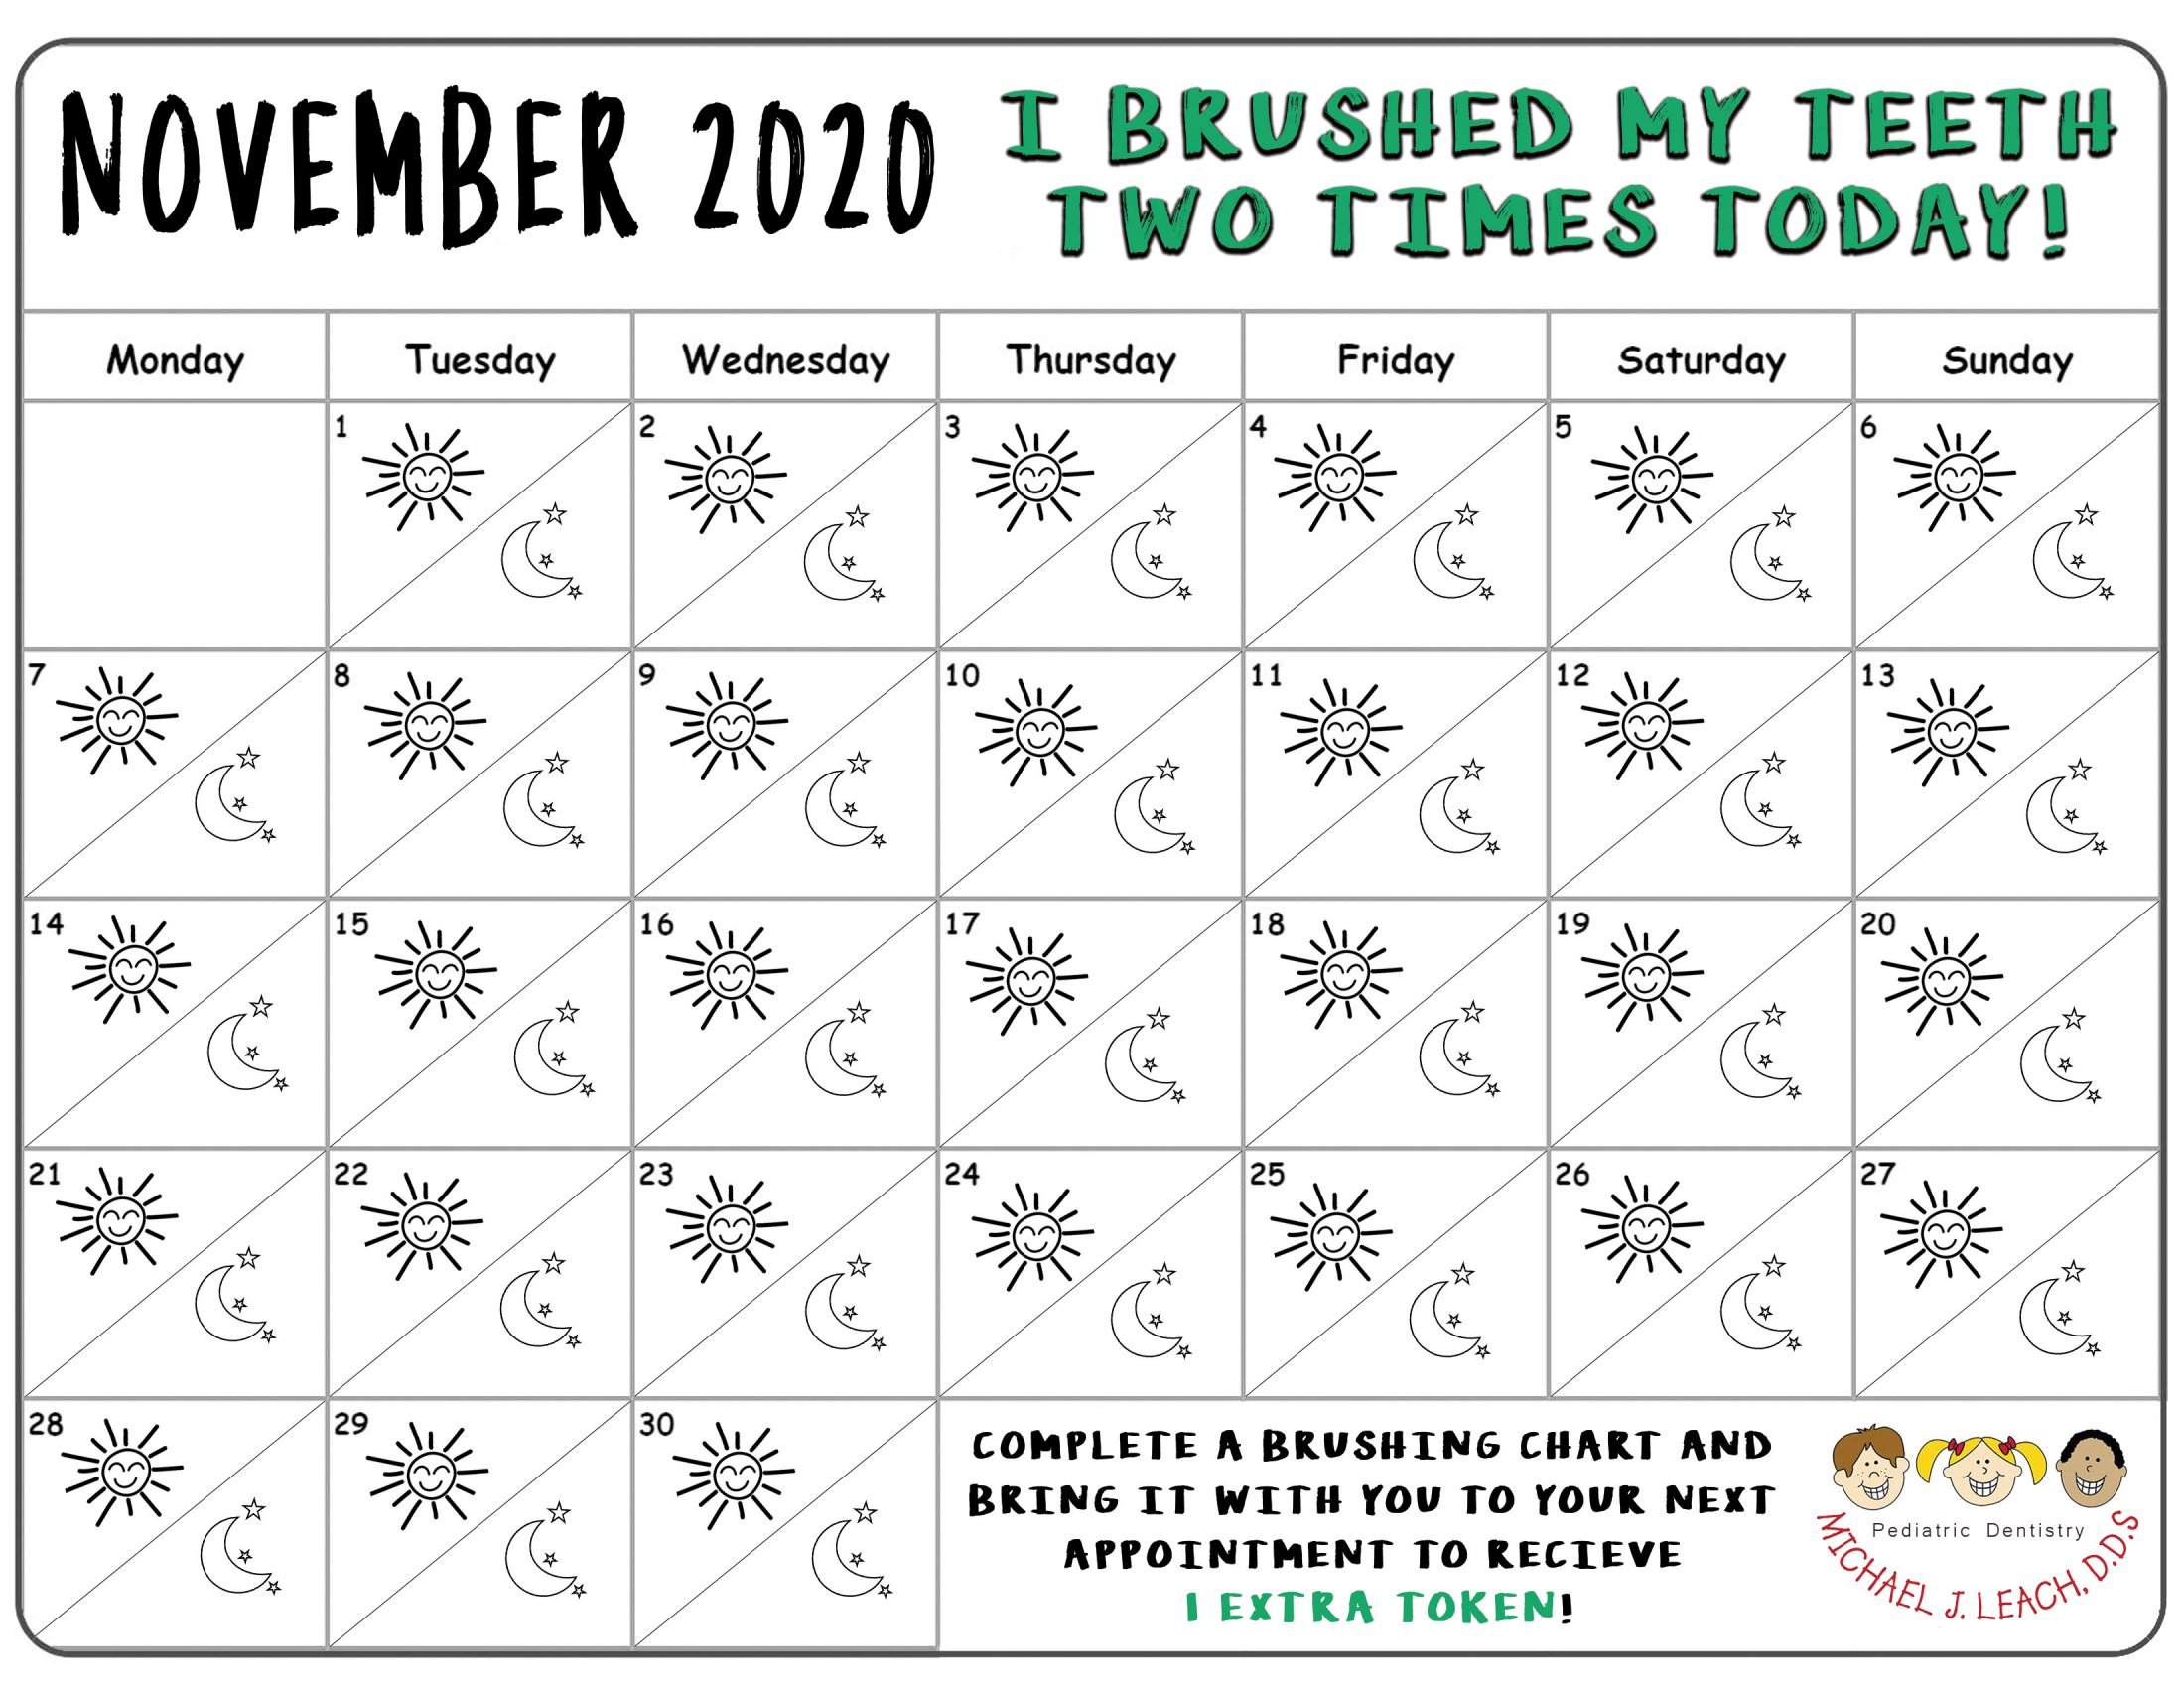 November 2020 Brushing Chart